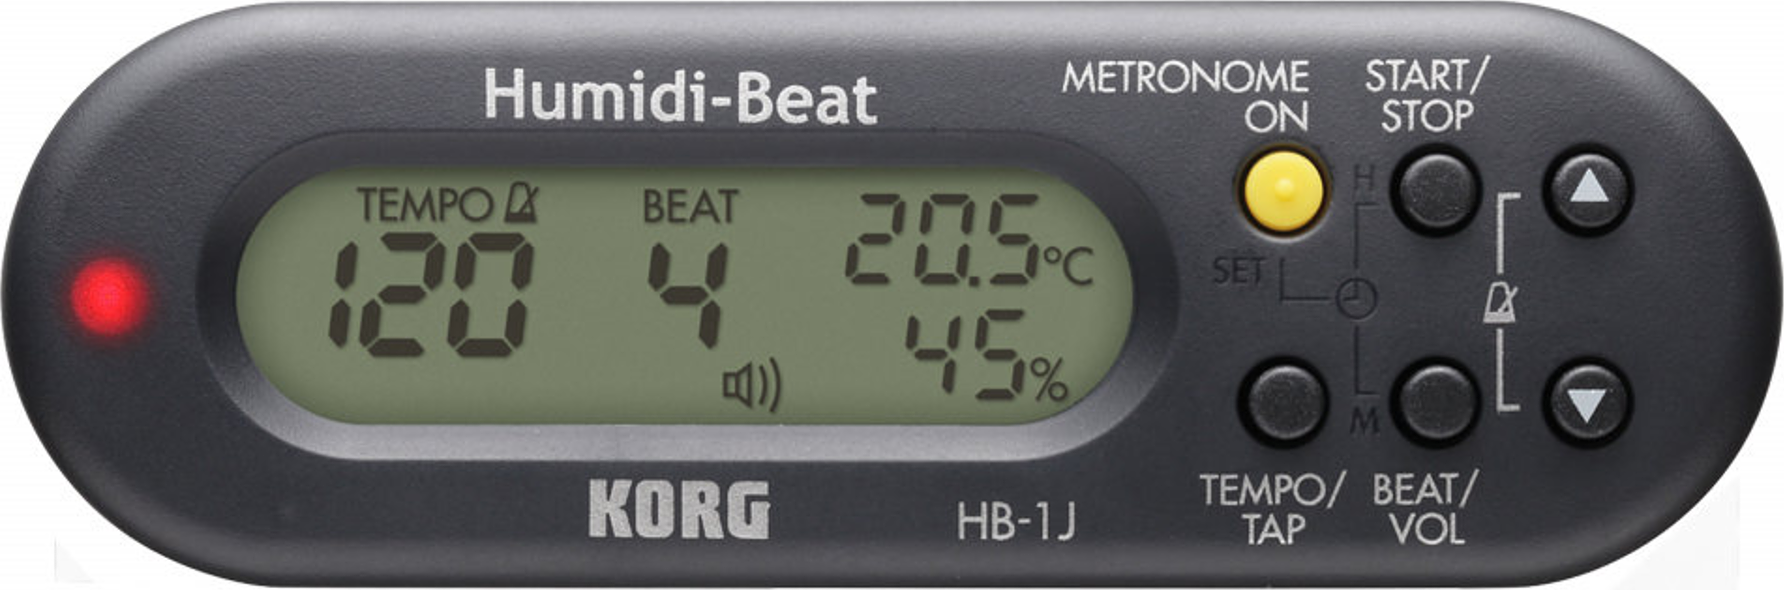 Korg Humidi-beat Metronome With Humidity Temperature Detector Black - Accordeur - Main picture